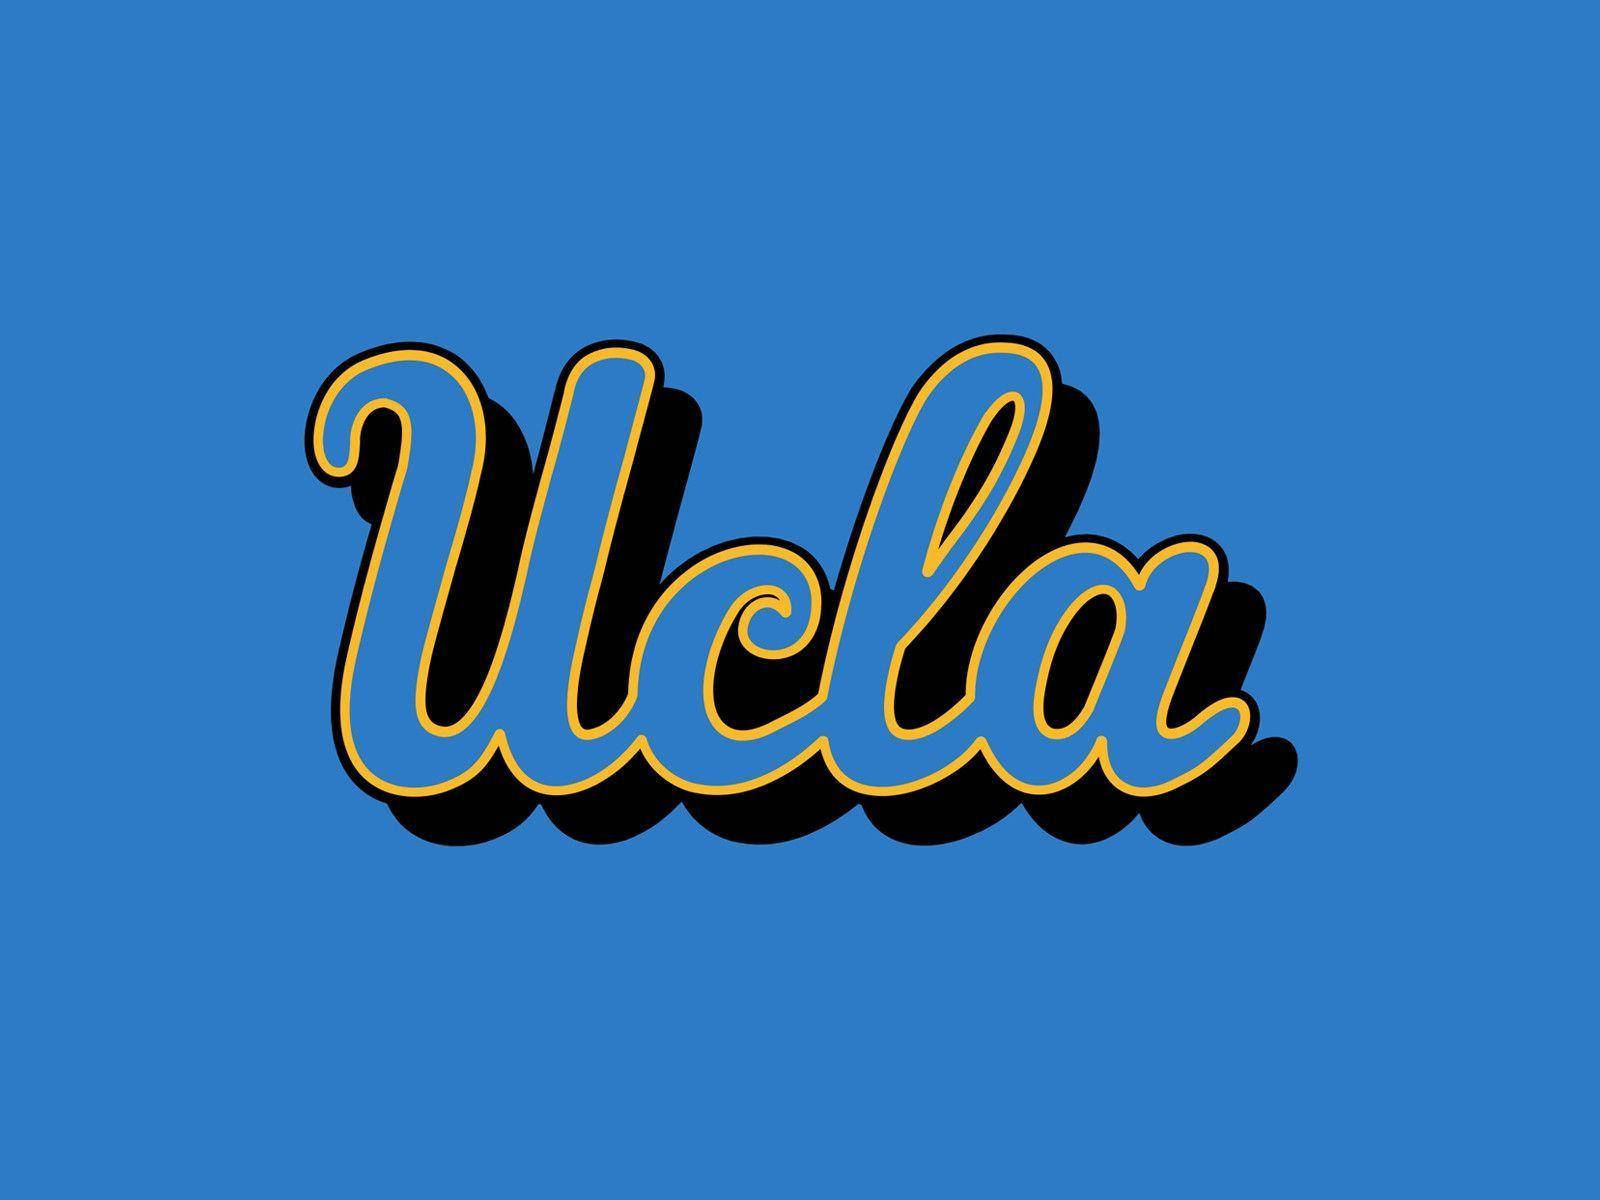 UCLA Blue For Desktop Wallpaper